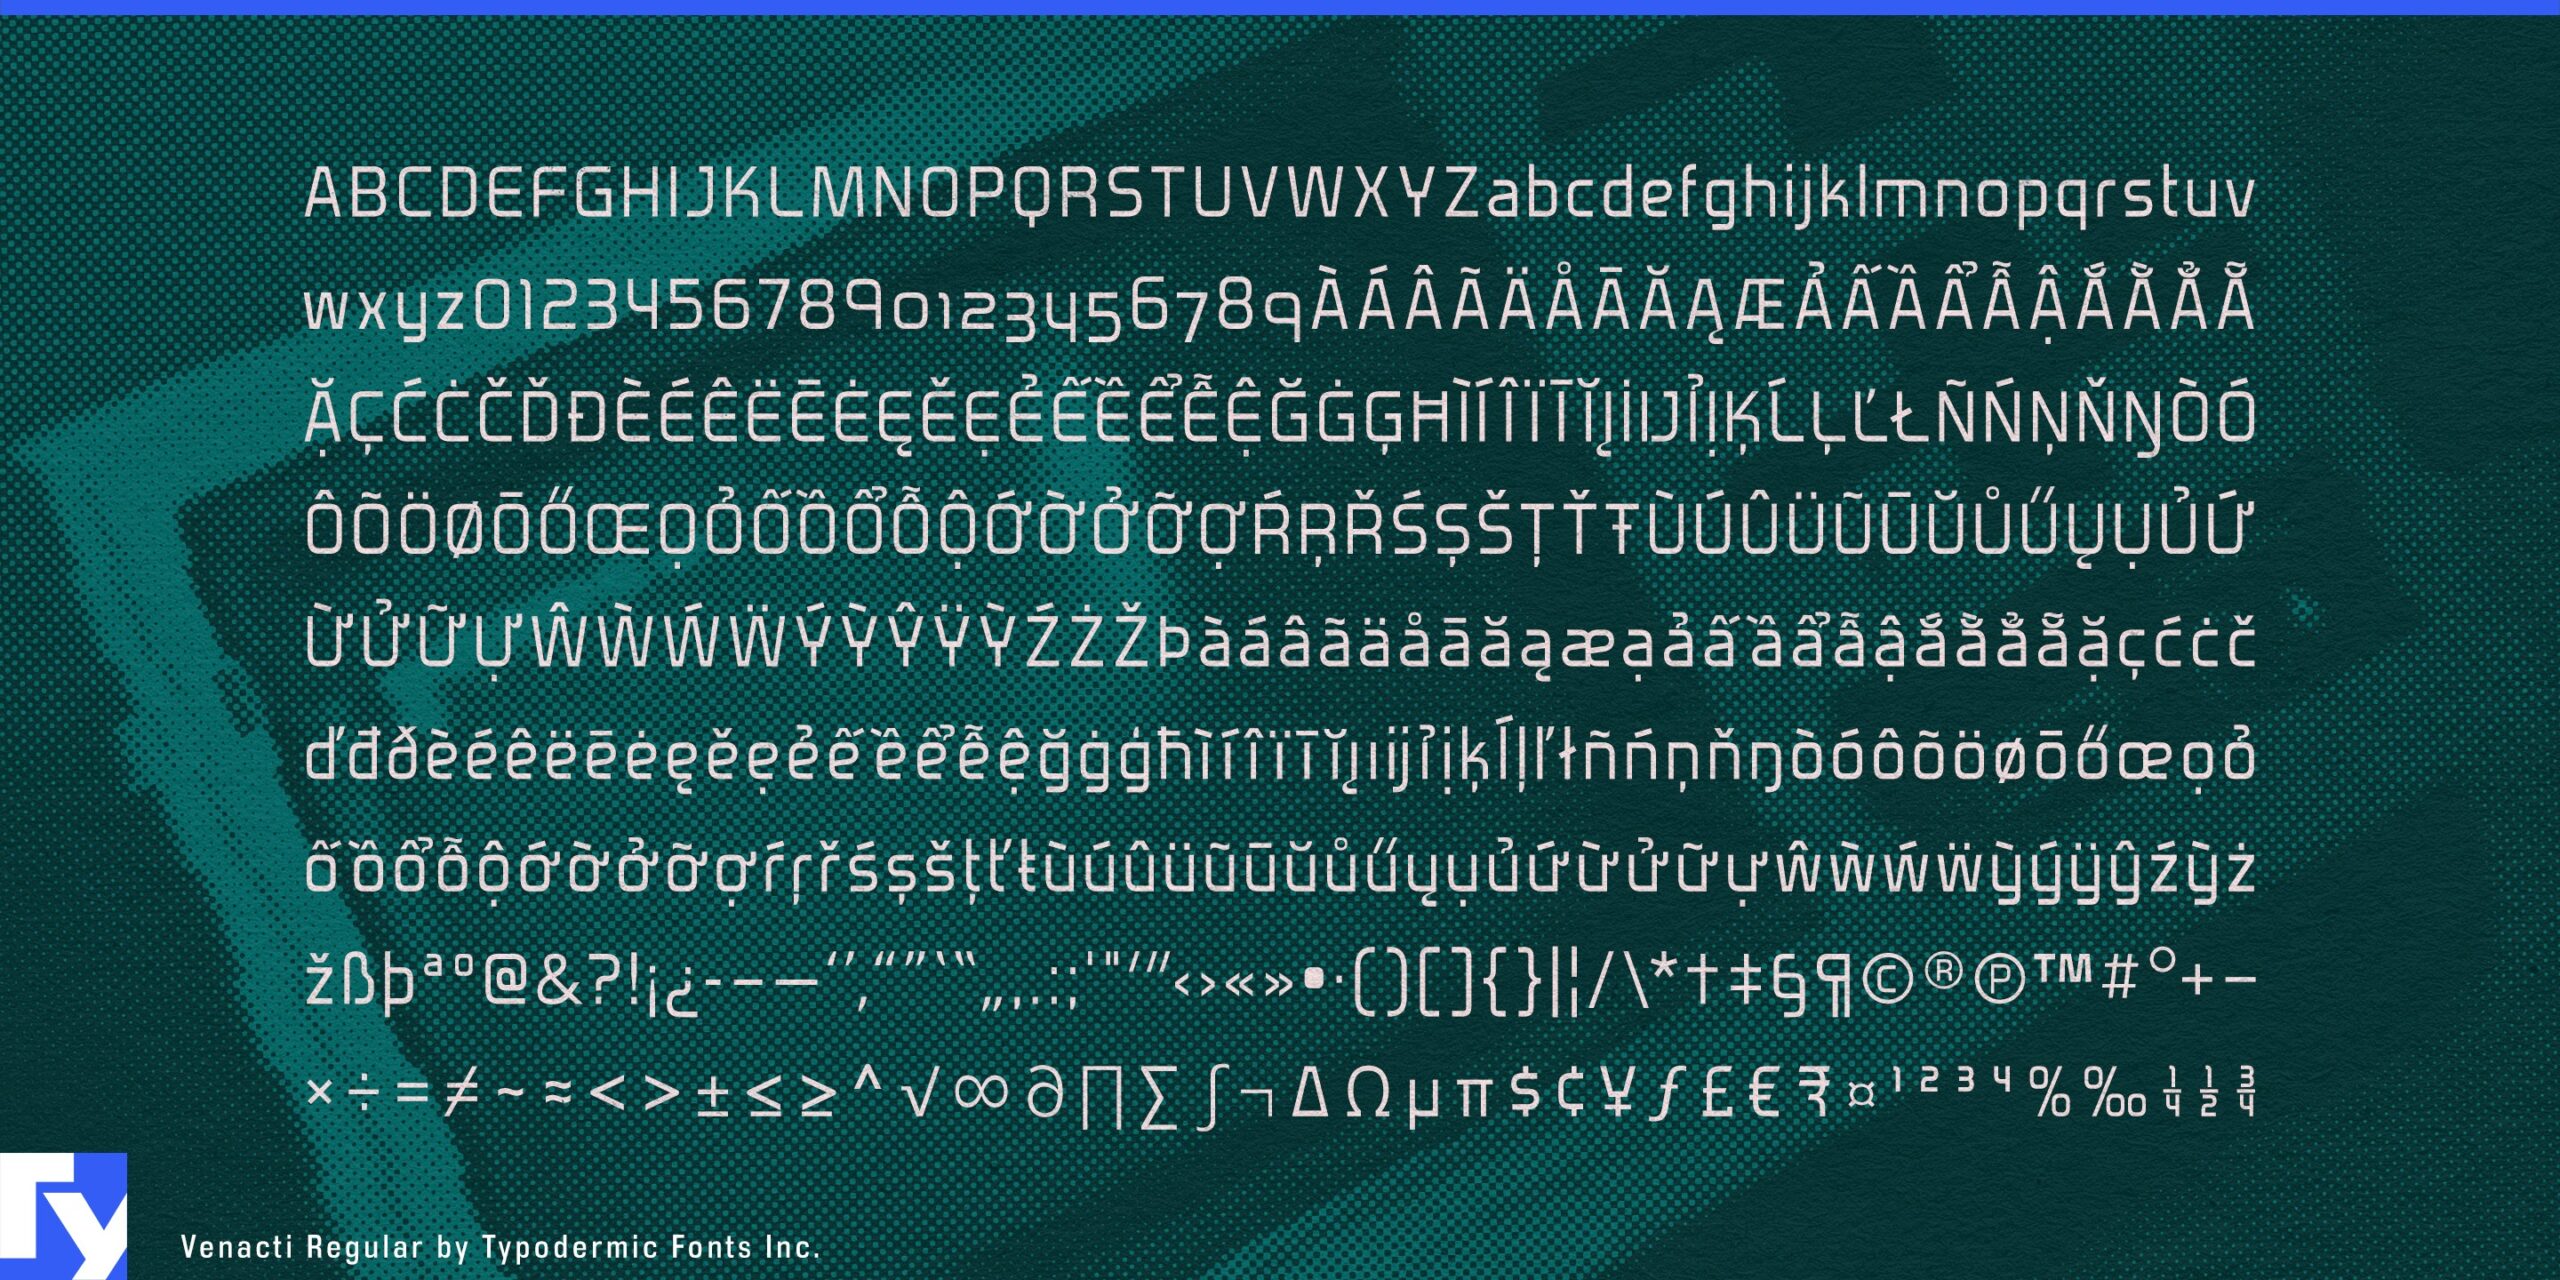 Futuristic Vibes: Venacti Typeface for a Modern Edge